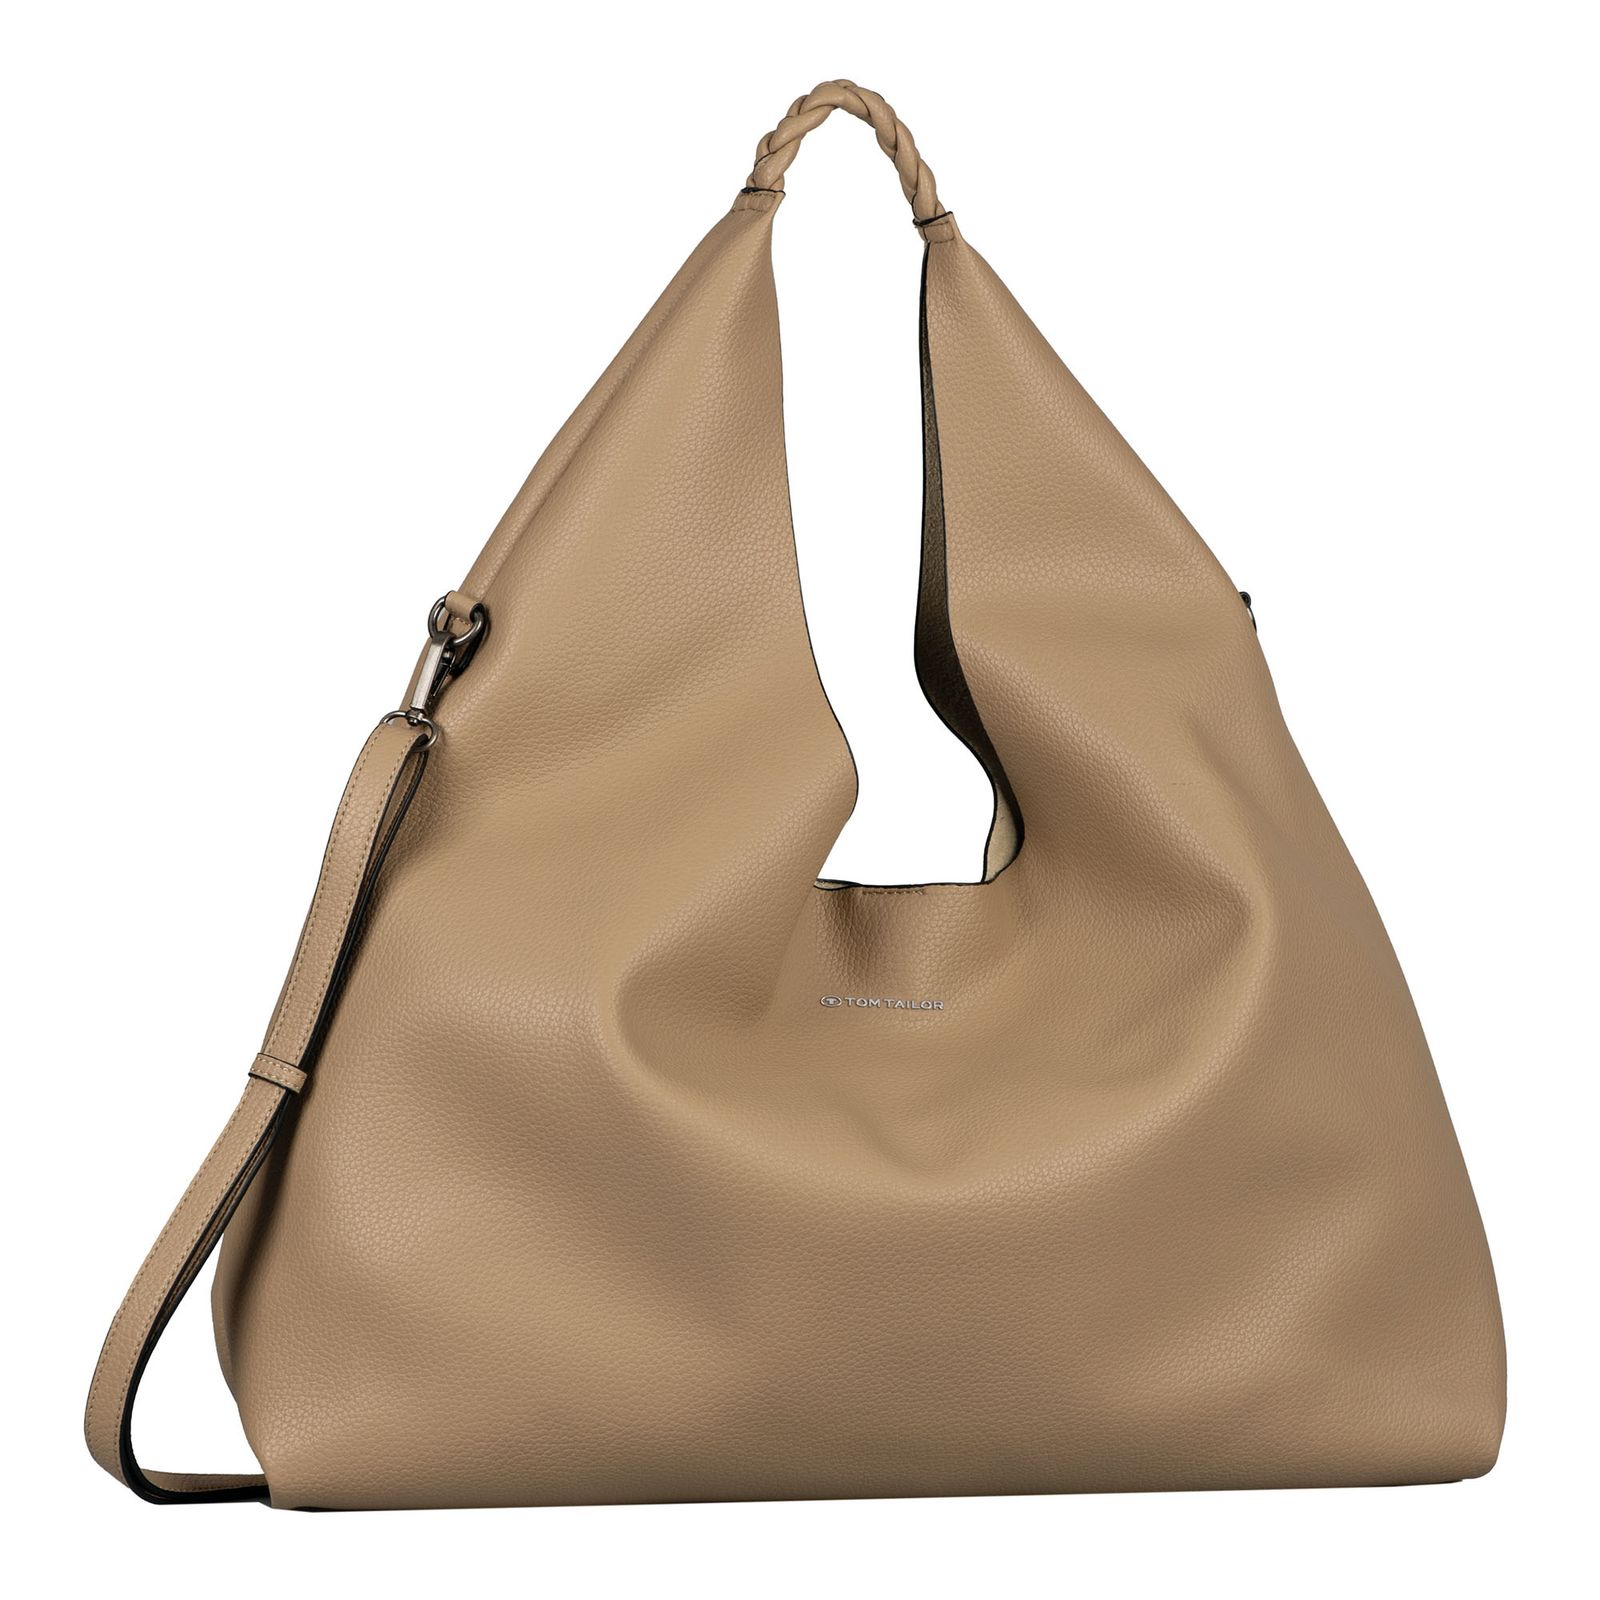 TOM TAILOR accessories Finna modeherz Hobo bag online | Taupe purses bags, & Buy | shoulder Bag